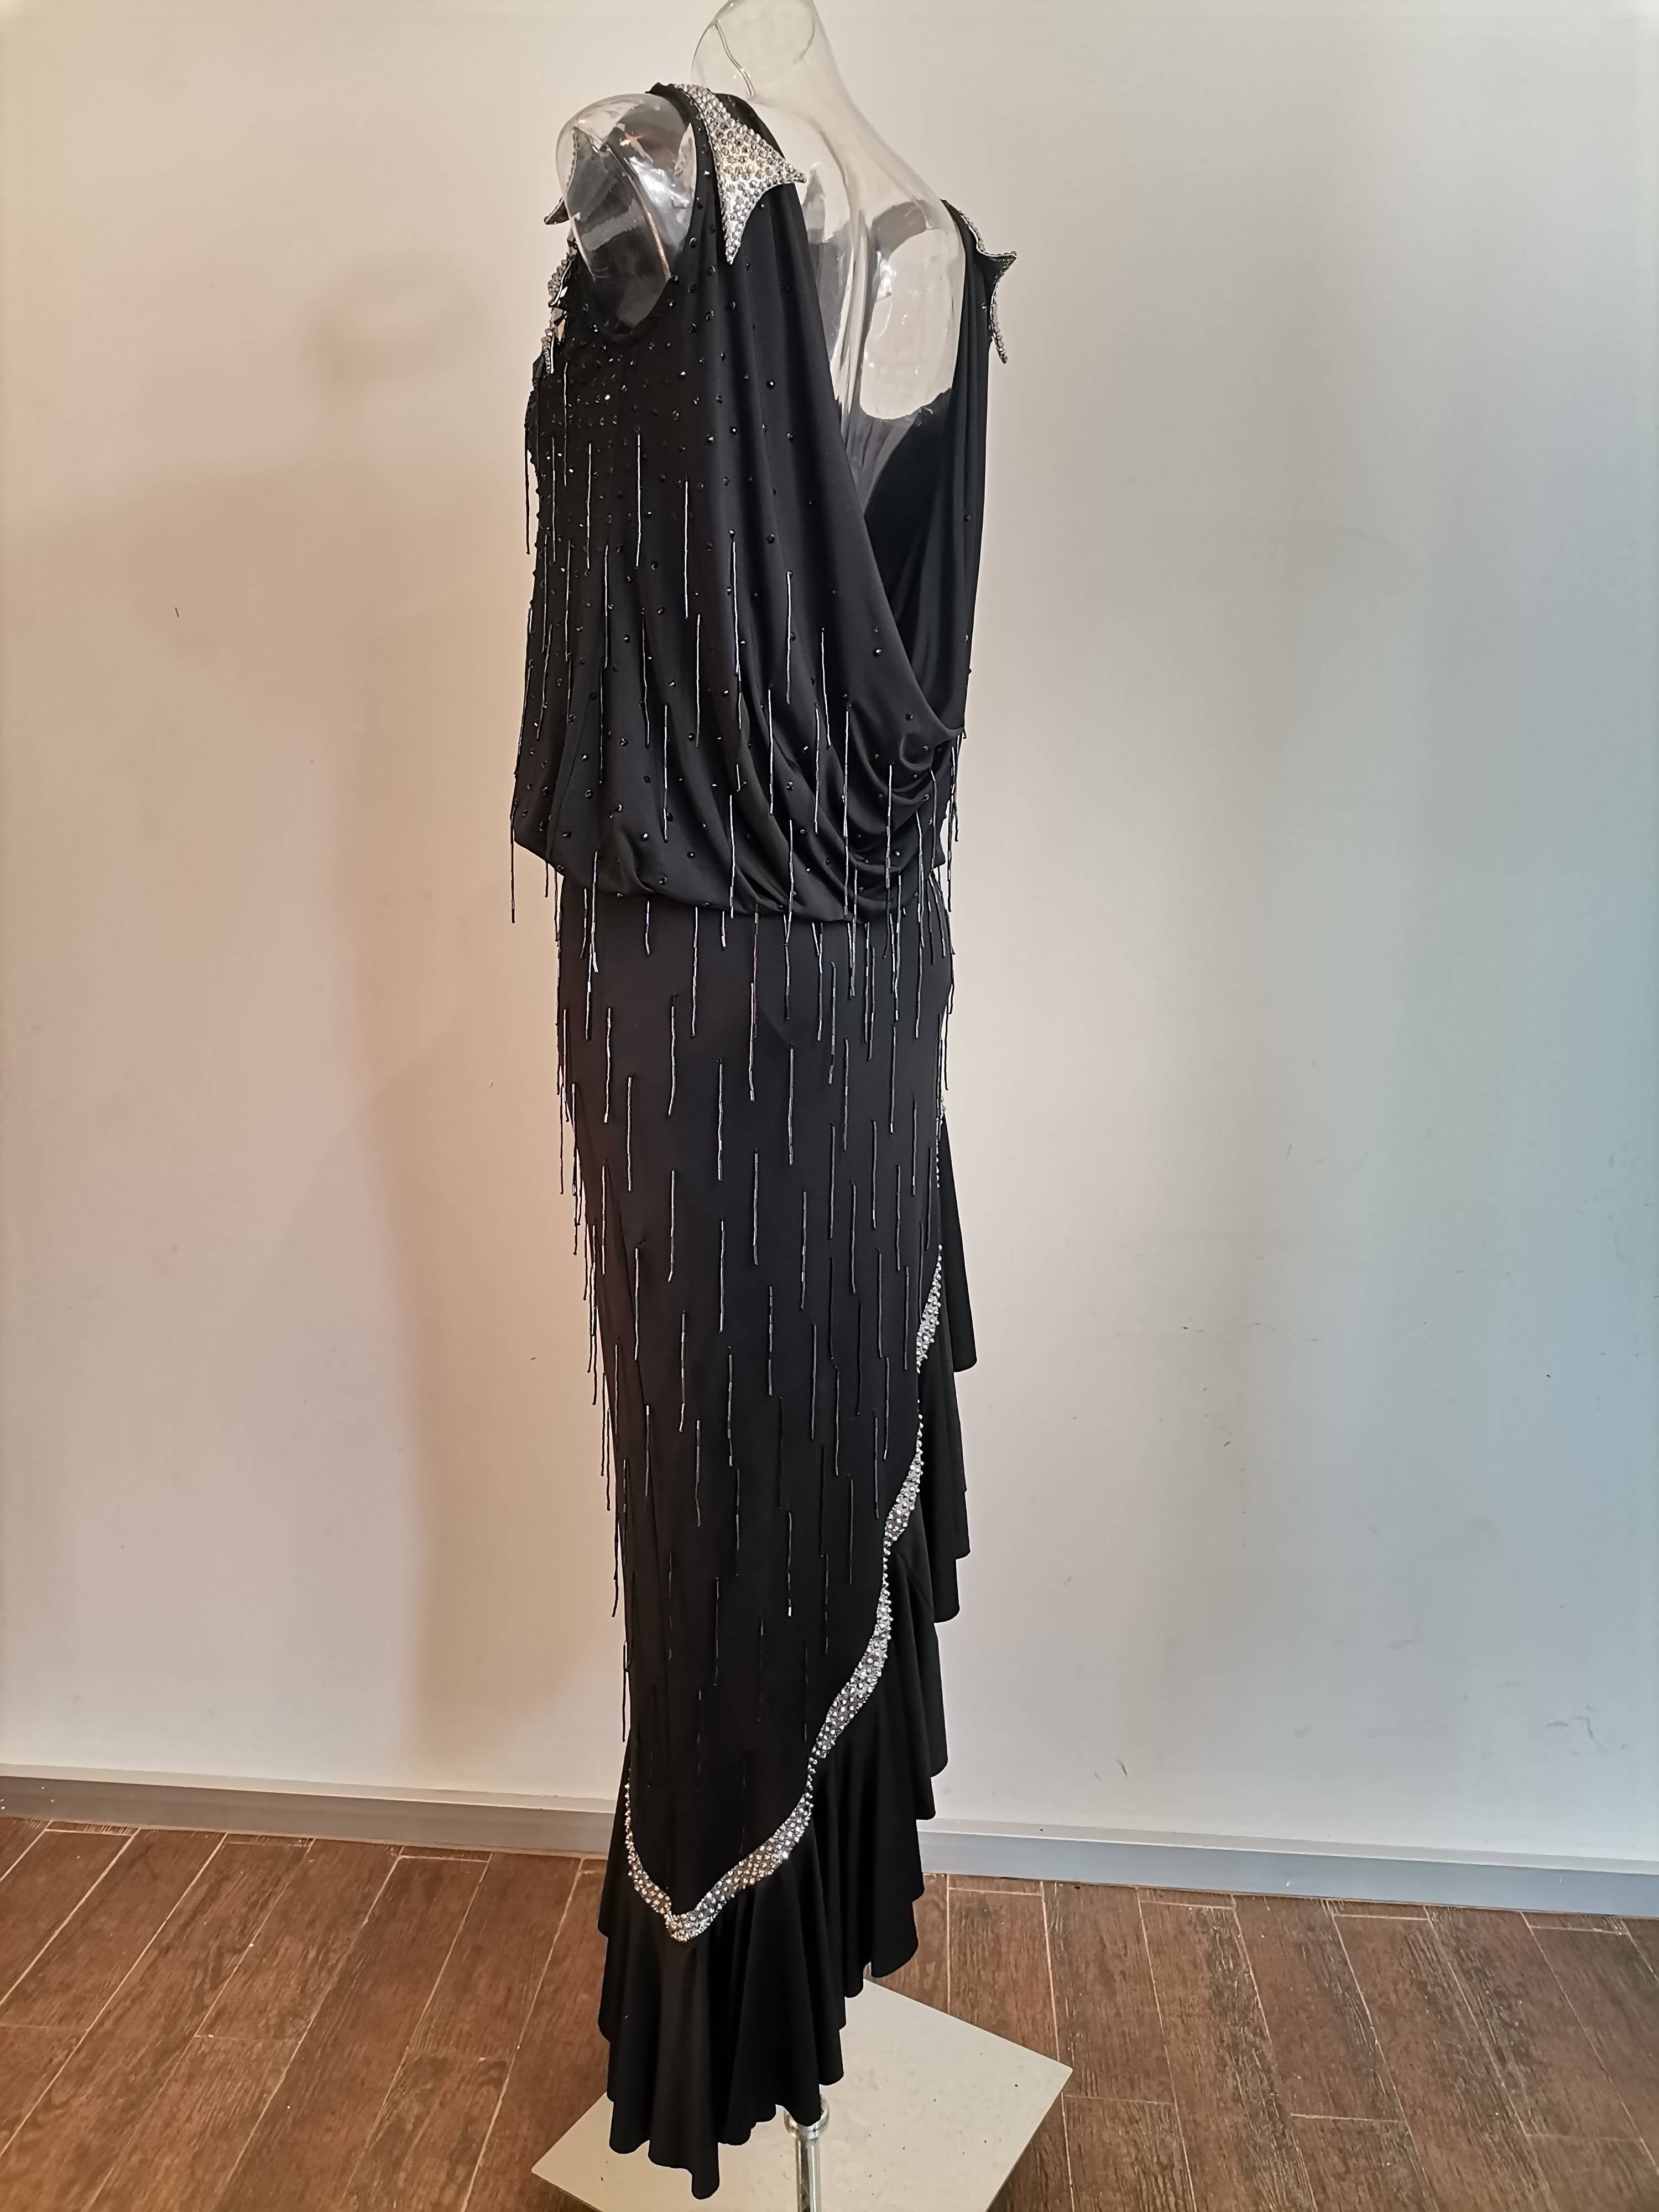 New Black Latin Dress With Crystals (latin dress for sale, latin, dancesport, rhythm)